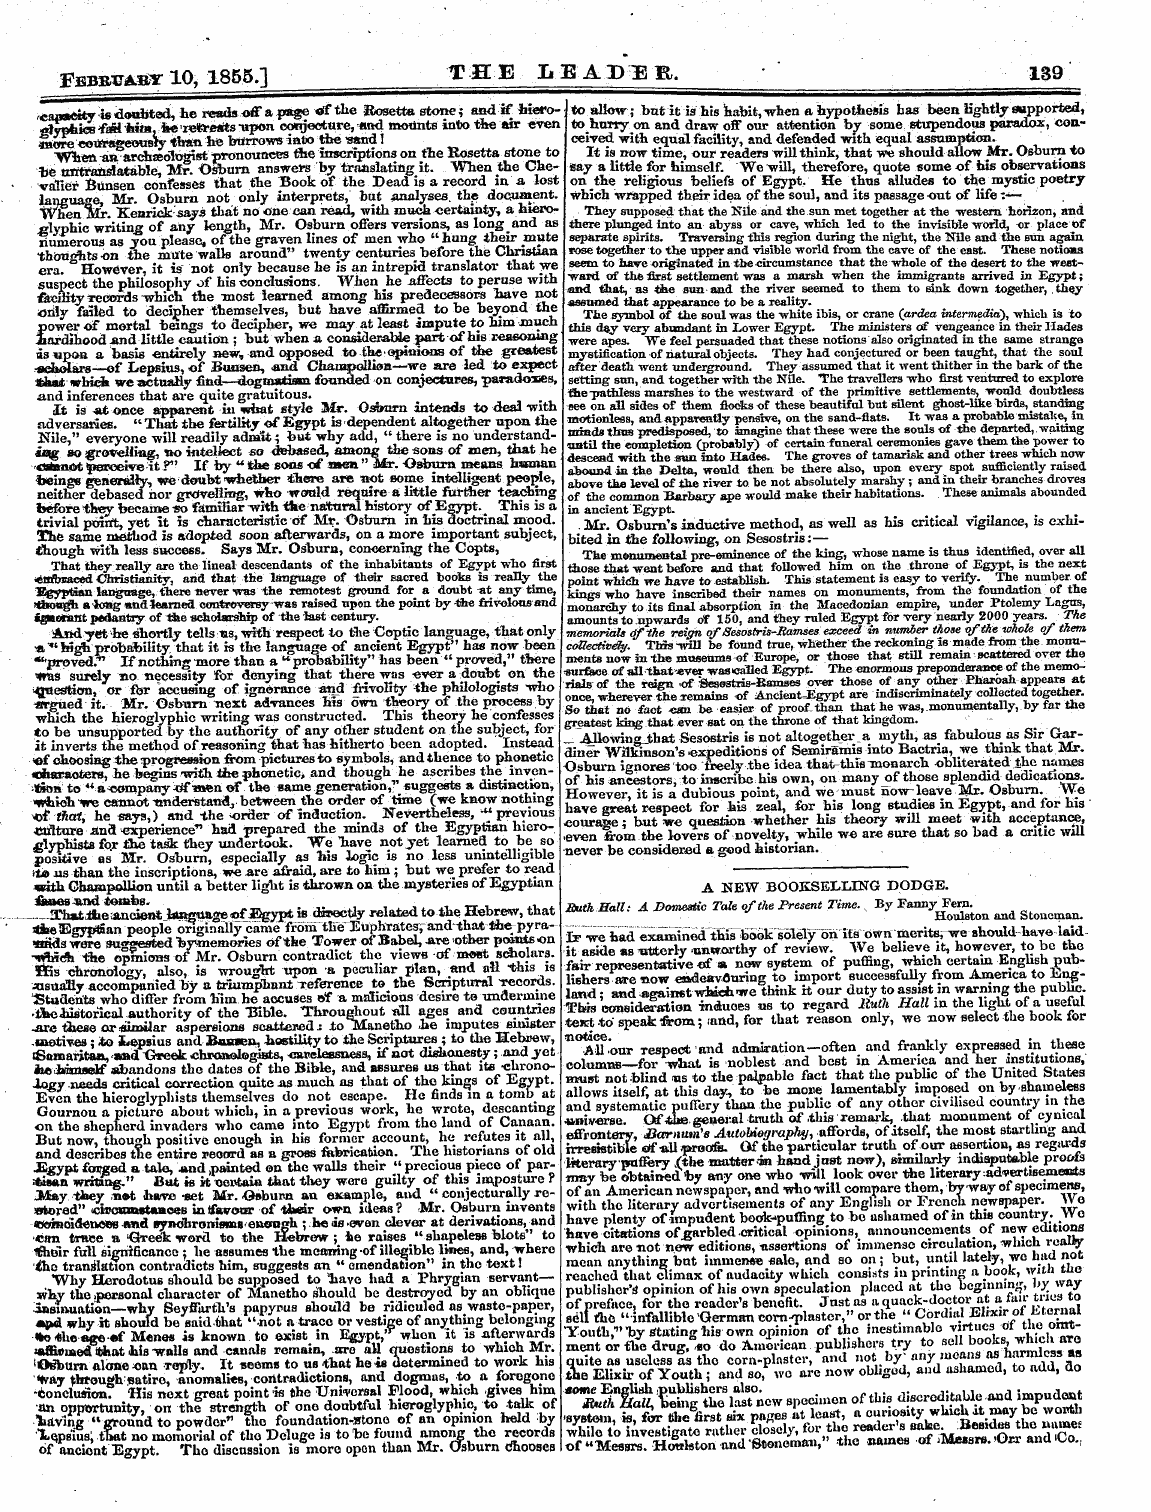 Leader (1850-1860): jS F Y, 2nd edition - Febbuaby 10, 185,5.1 Fge Leader. 139